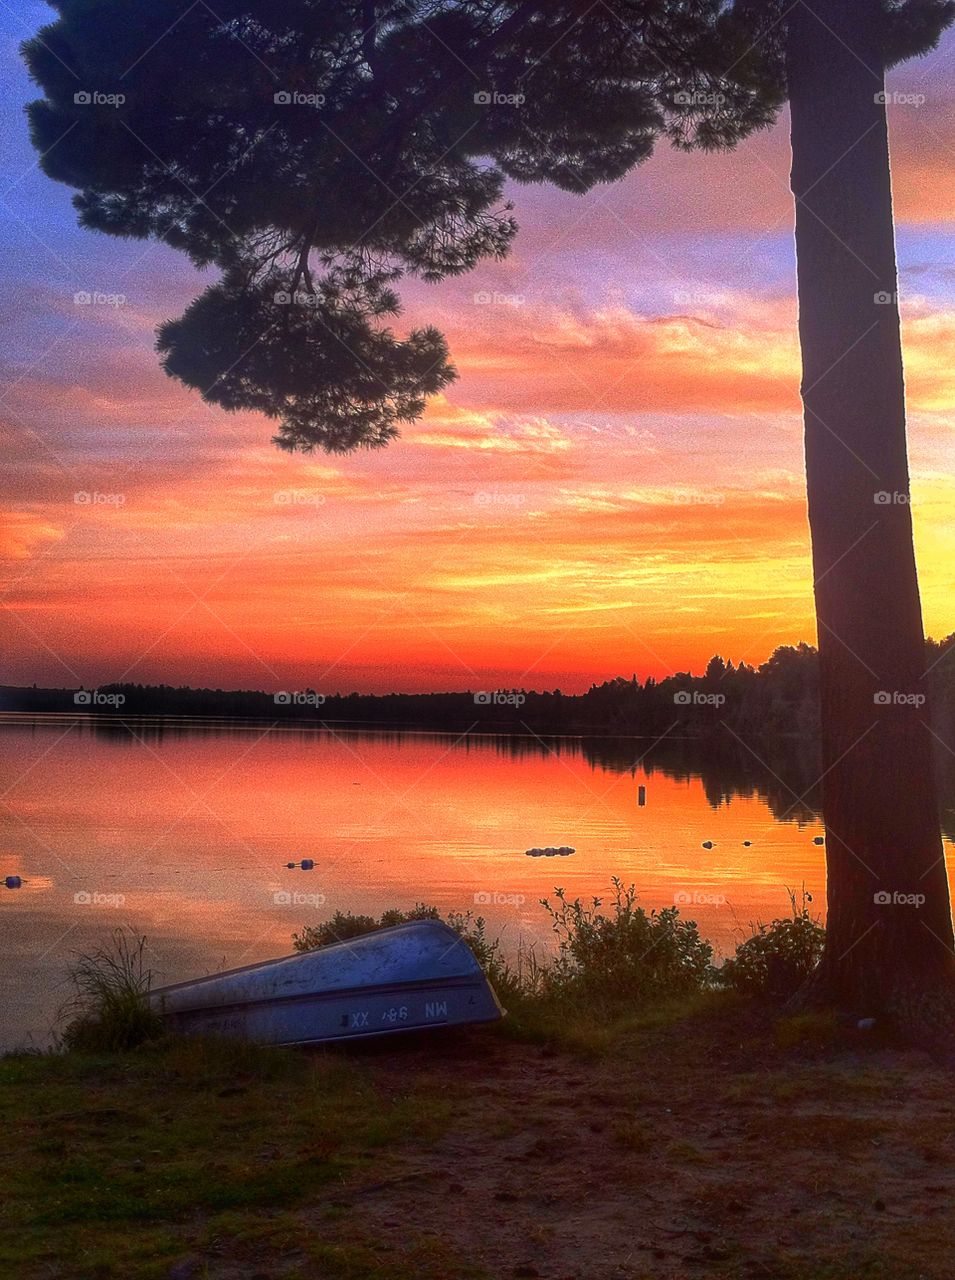 Cloud reflecting on lake at sunset